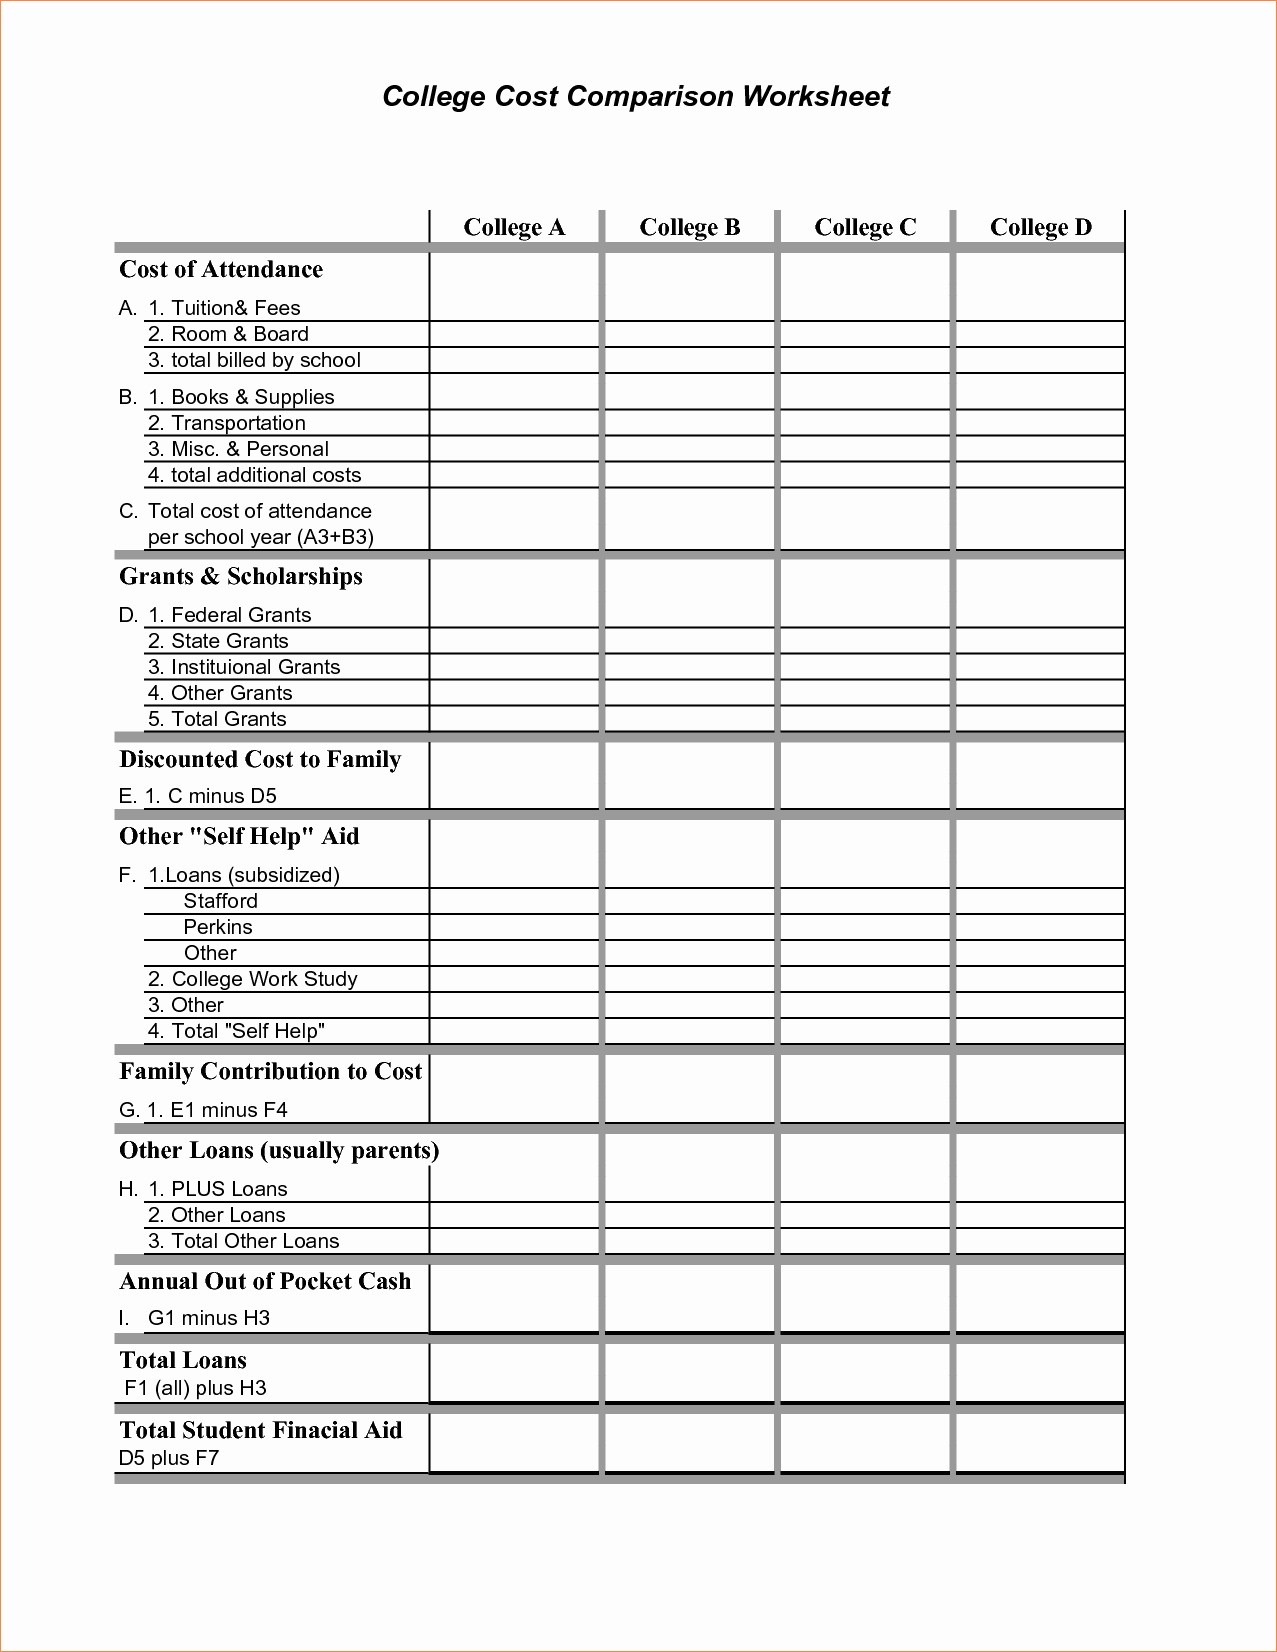 College Comparison Worksheet Excel Beautiful Parison Document Spreadsheet